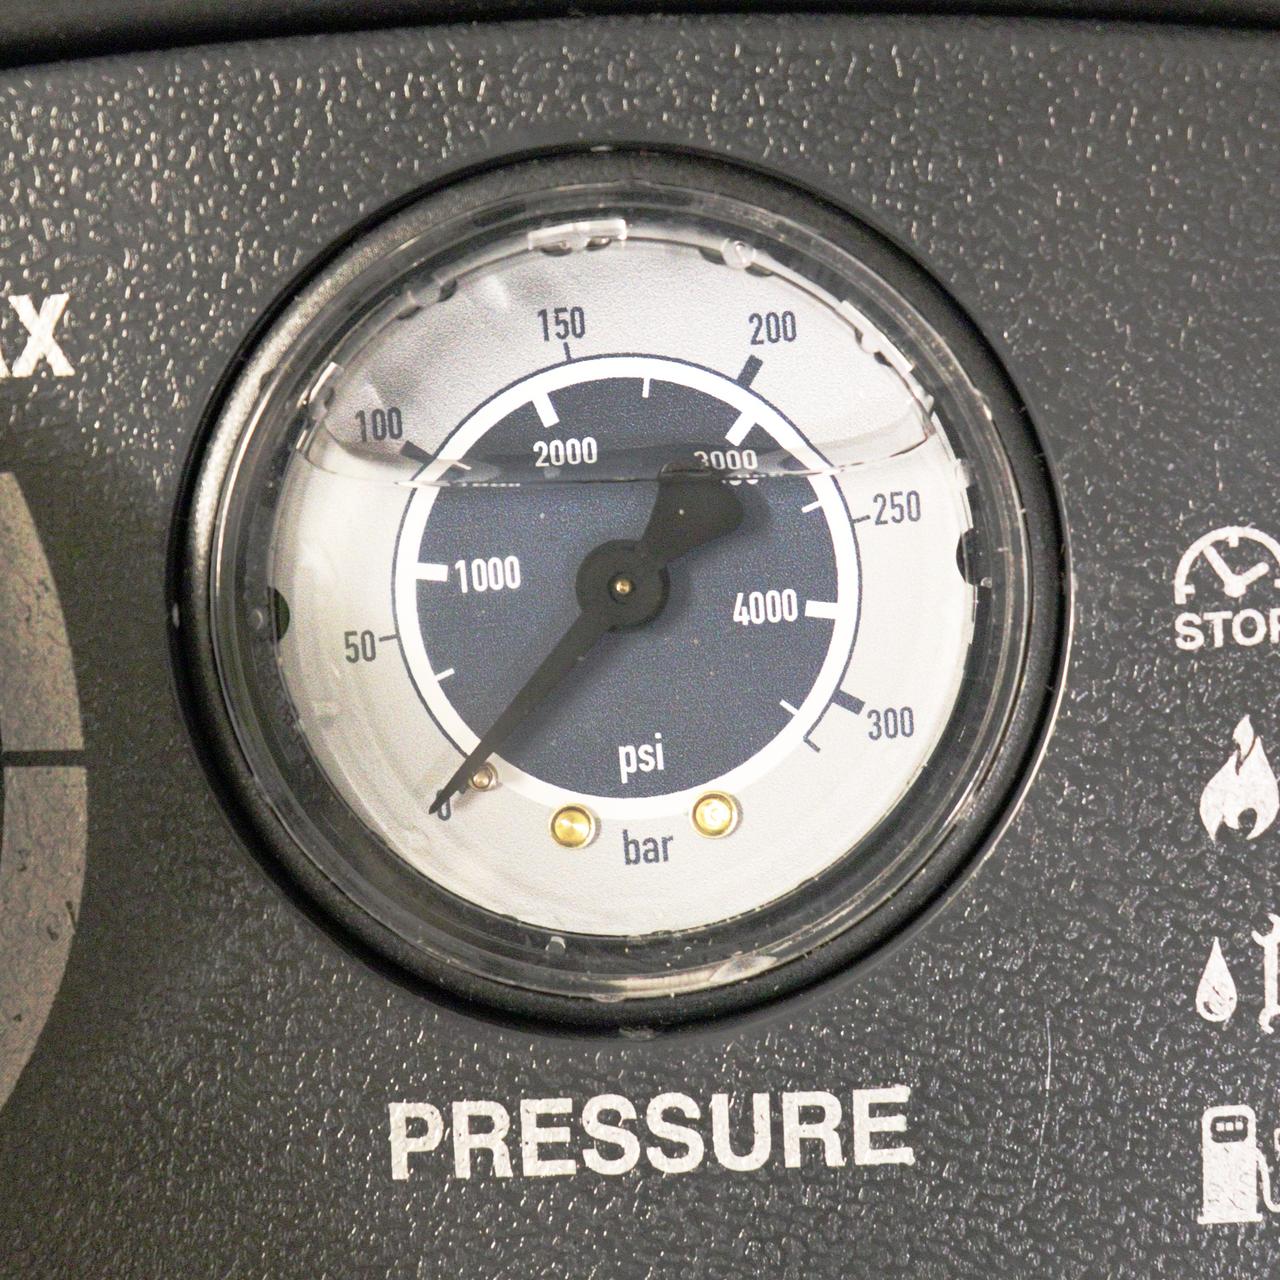 Hyundai HY155HPW-1 2610psi 110°C Hot Pressure Washer - 2800W